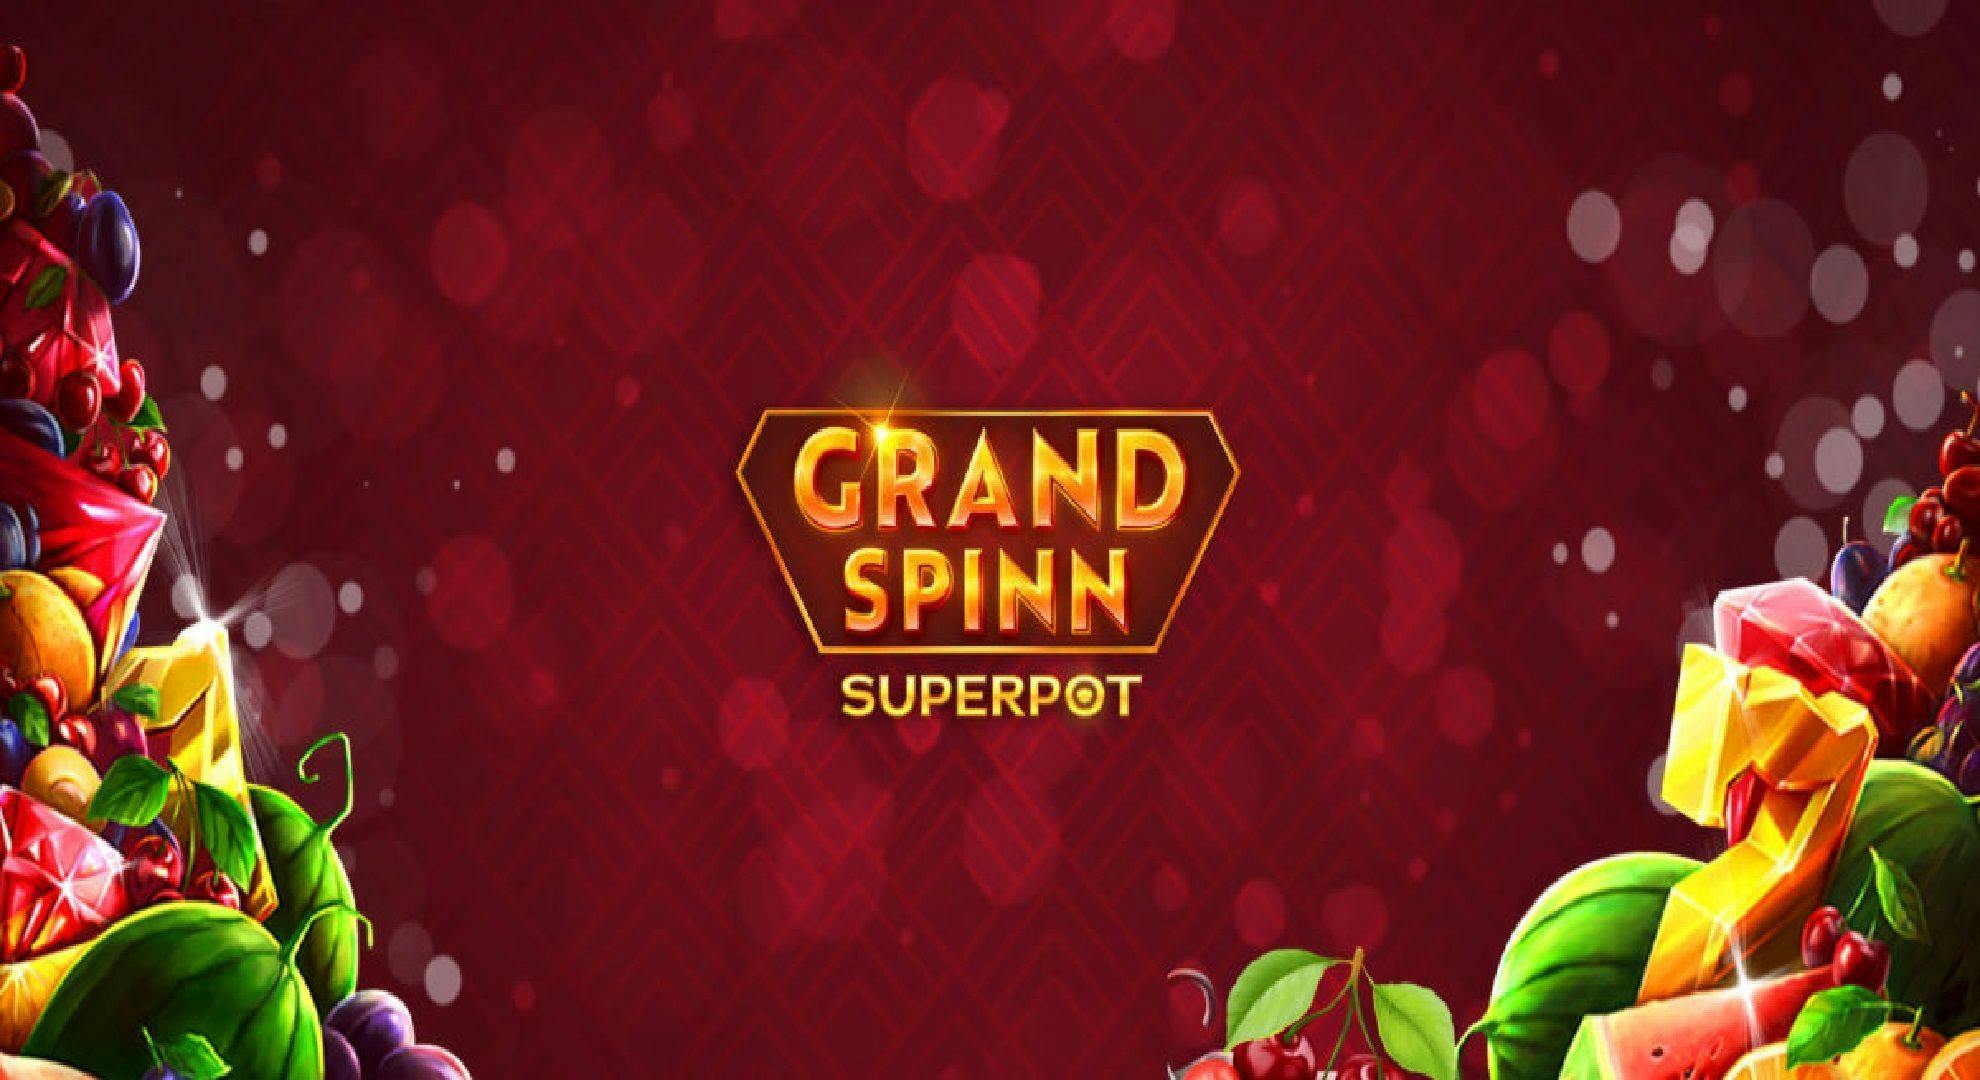 Grand Spinn Superpot Slot Online Free Play